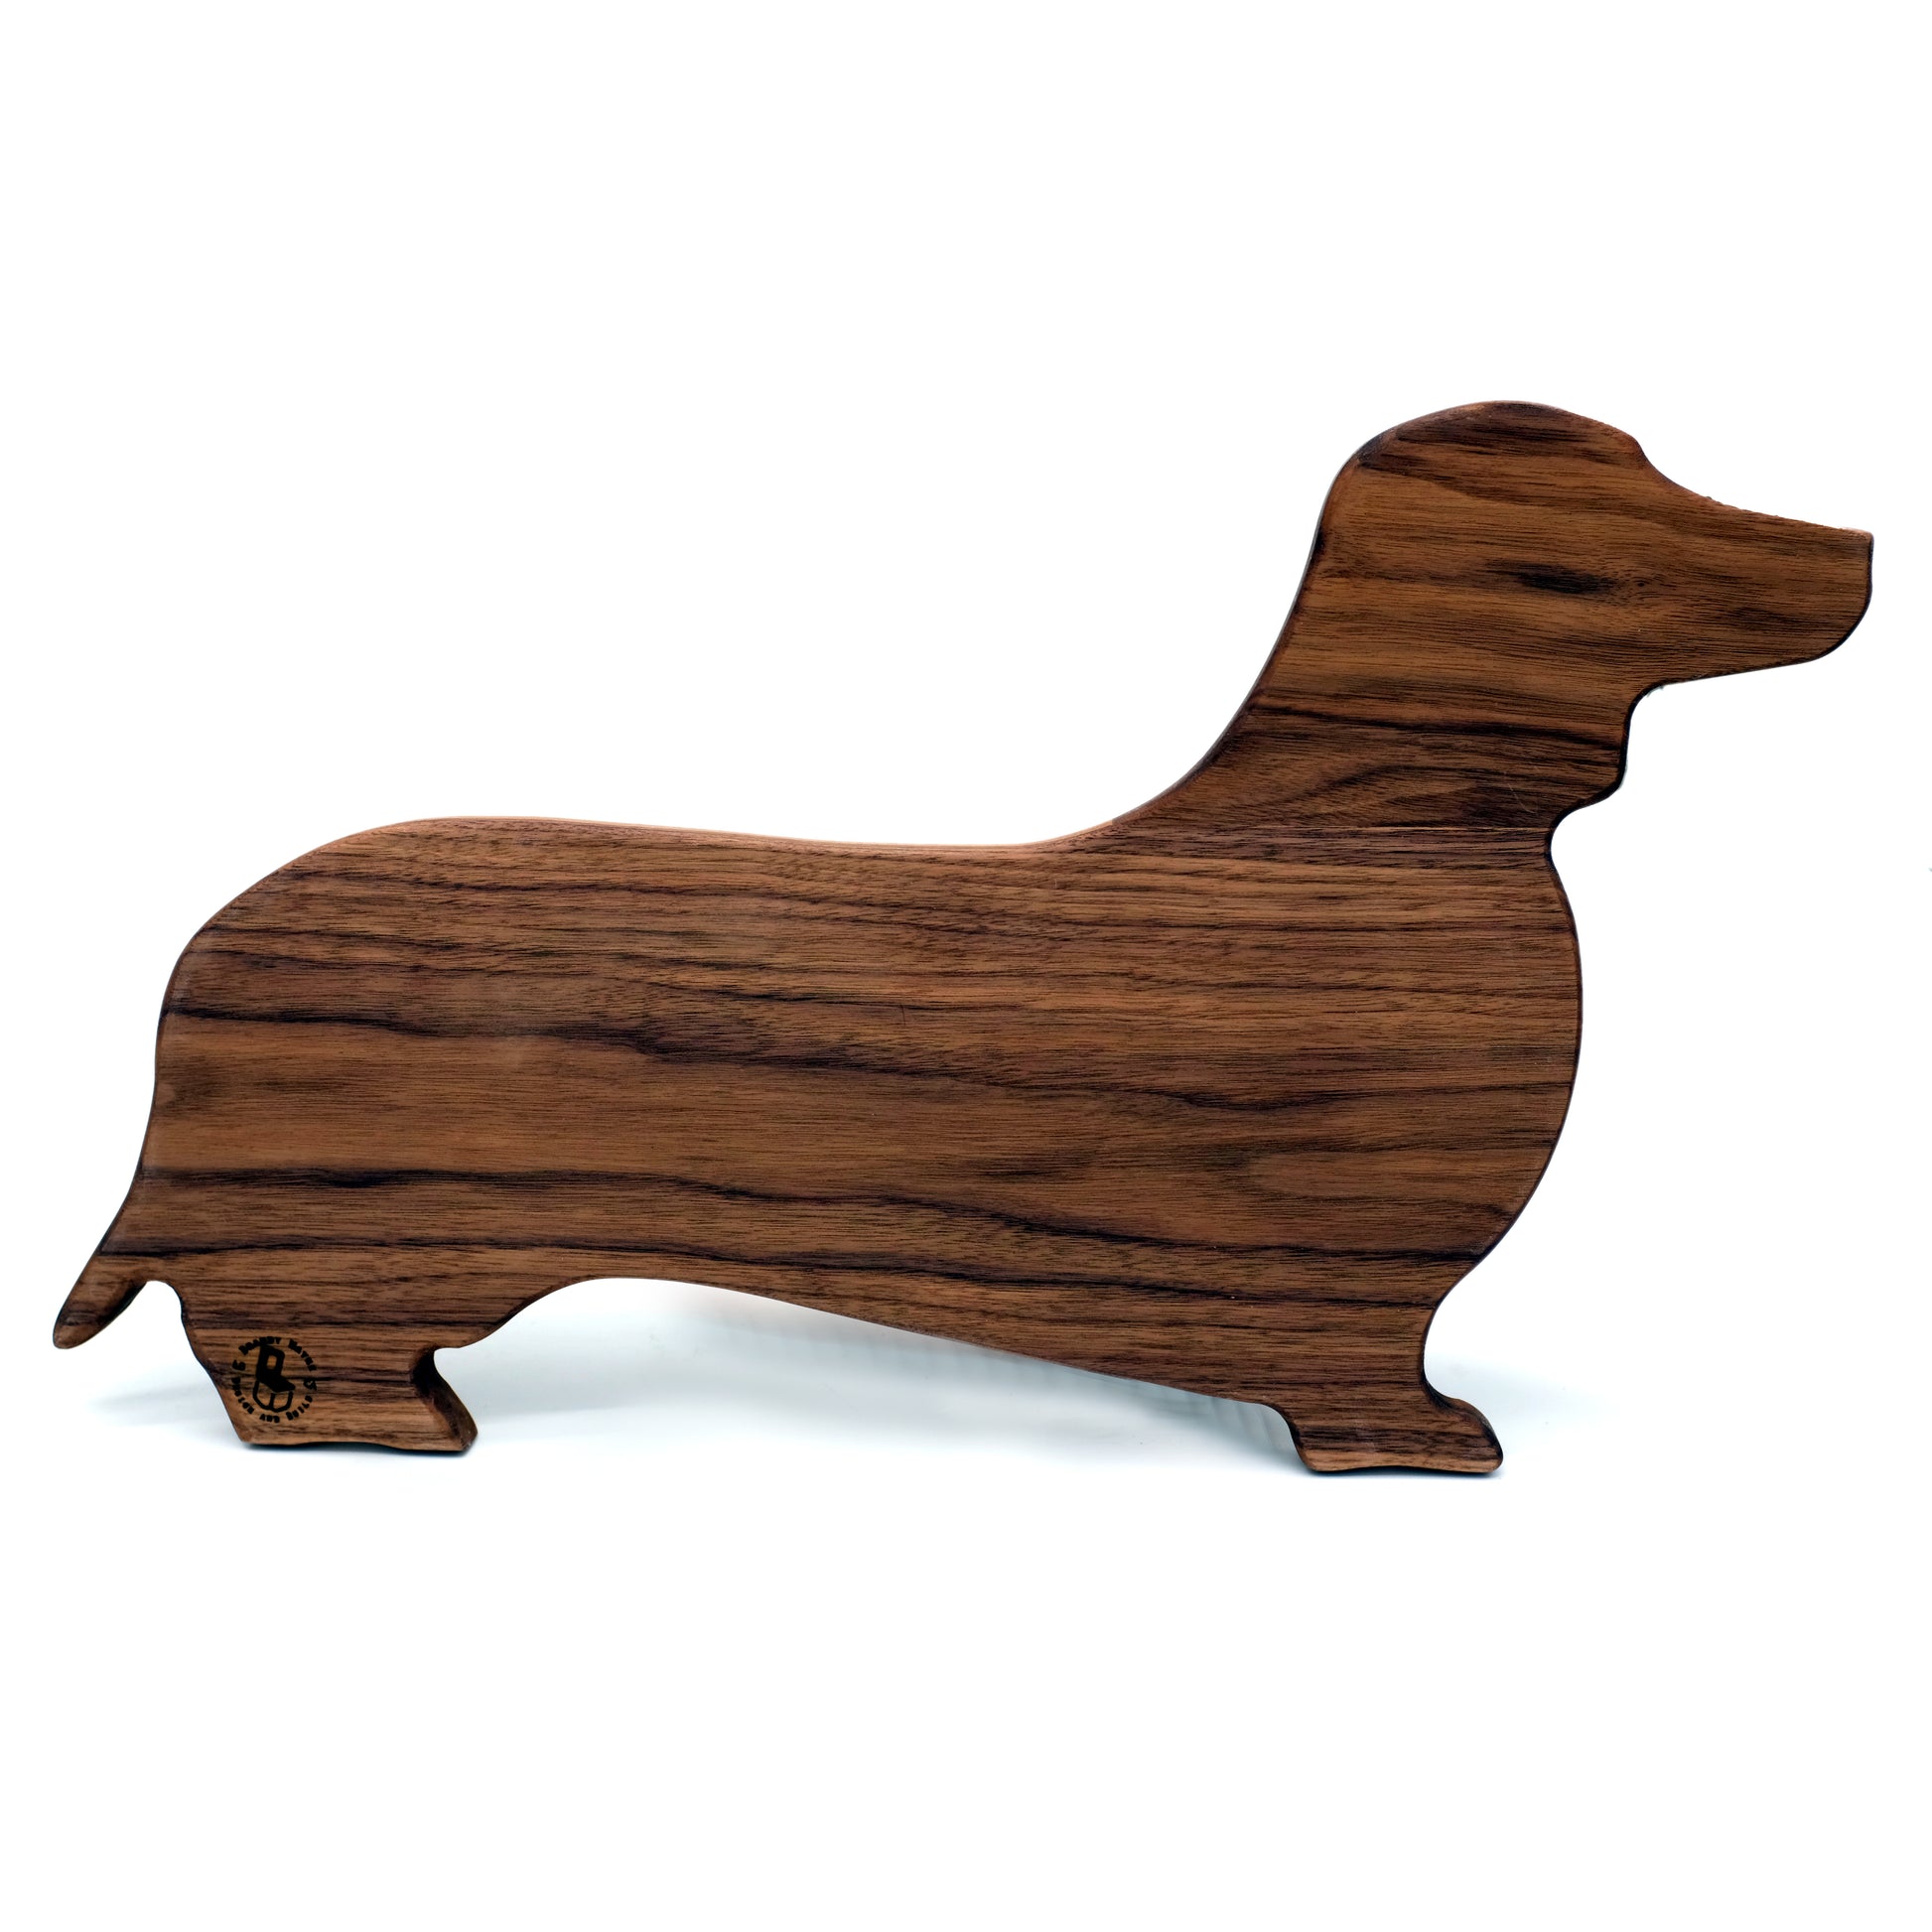 wiener dog shaped cutting board